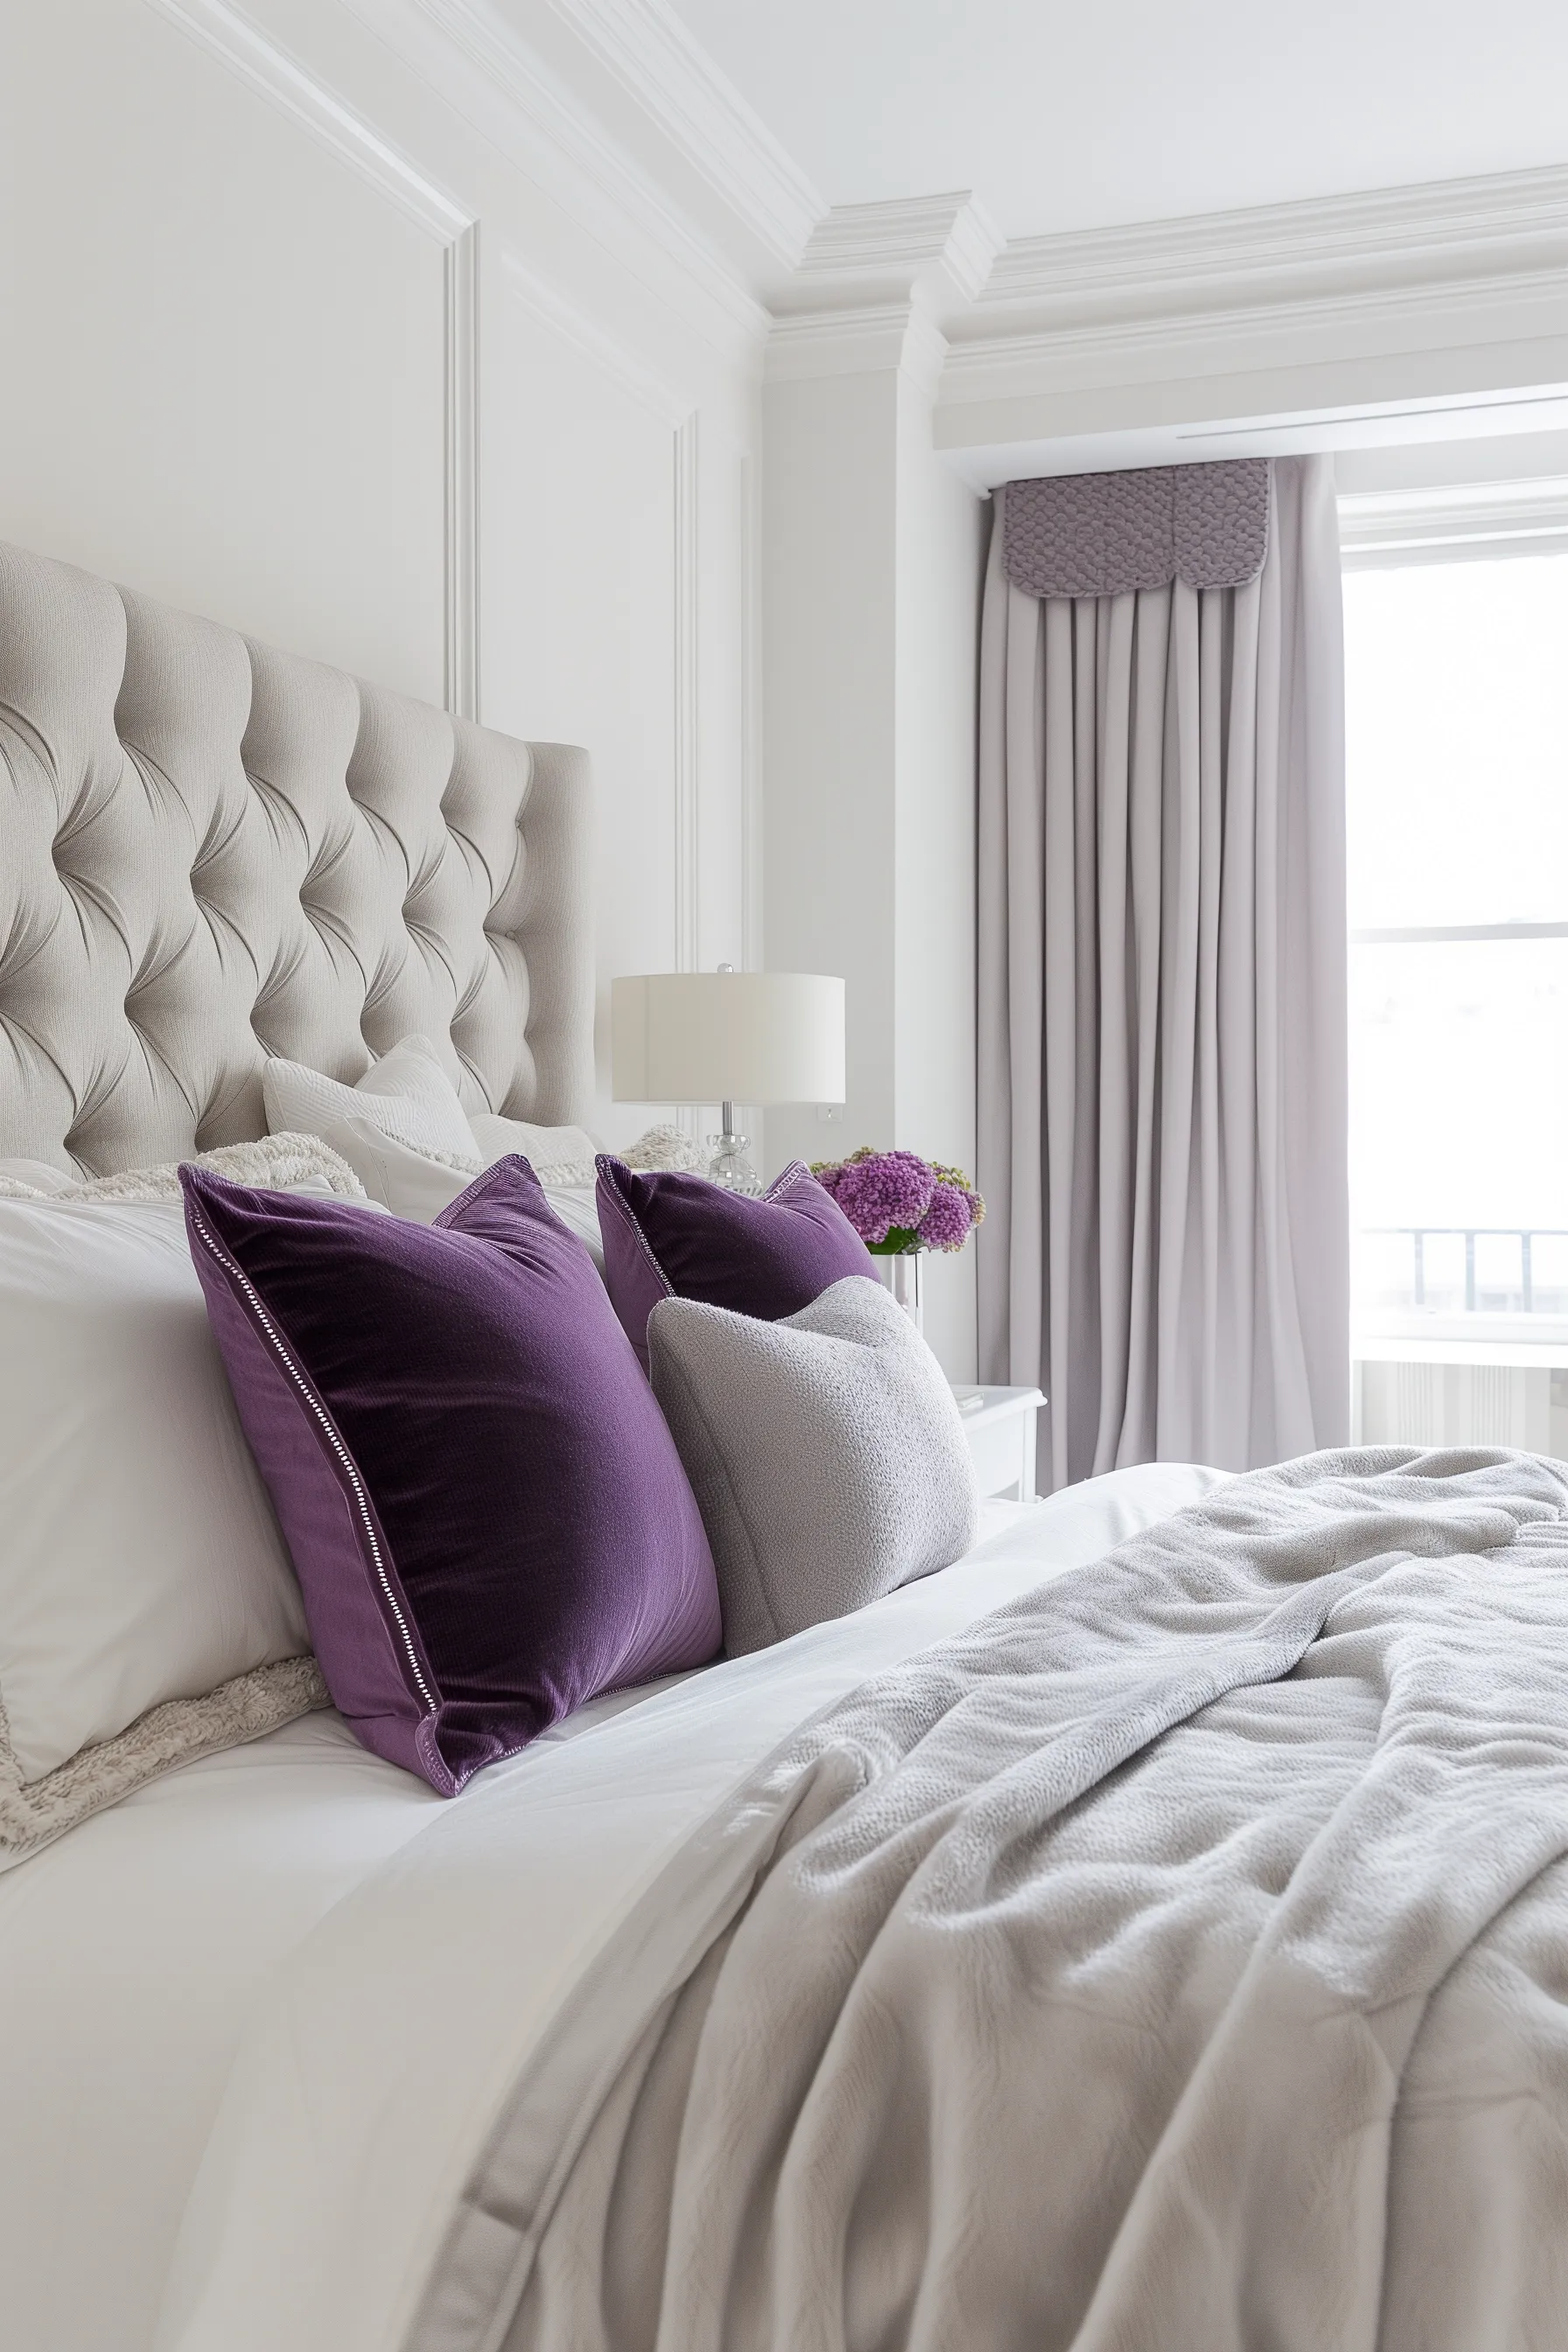 white, purple and grey bedroom